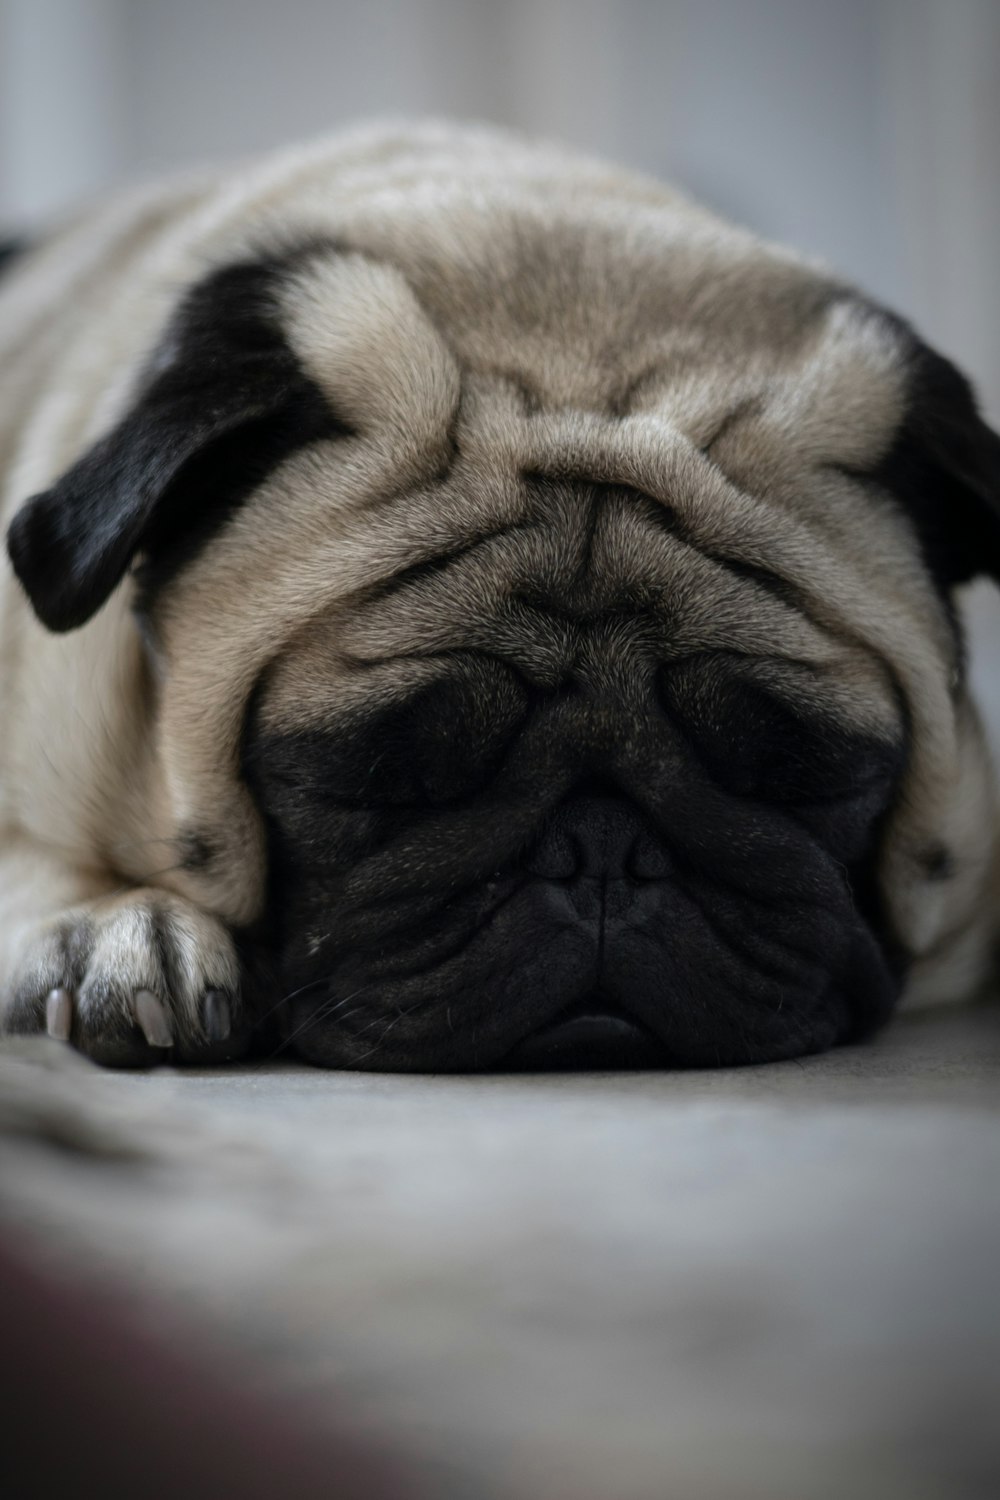 a pug dog is sleeping on a bed